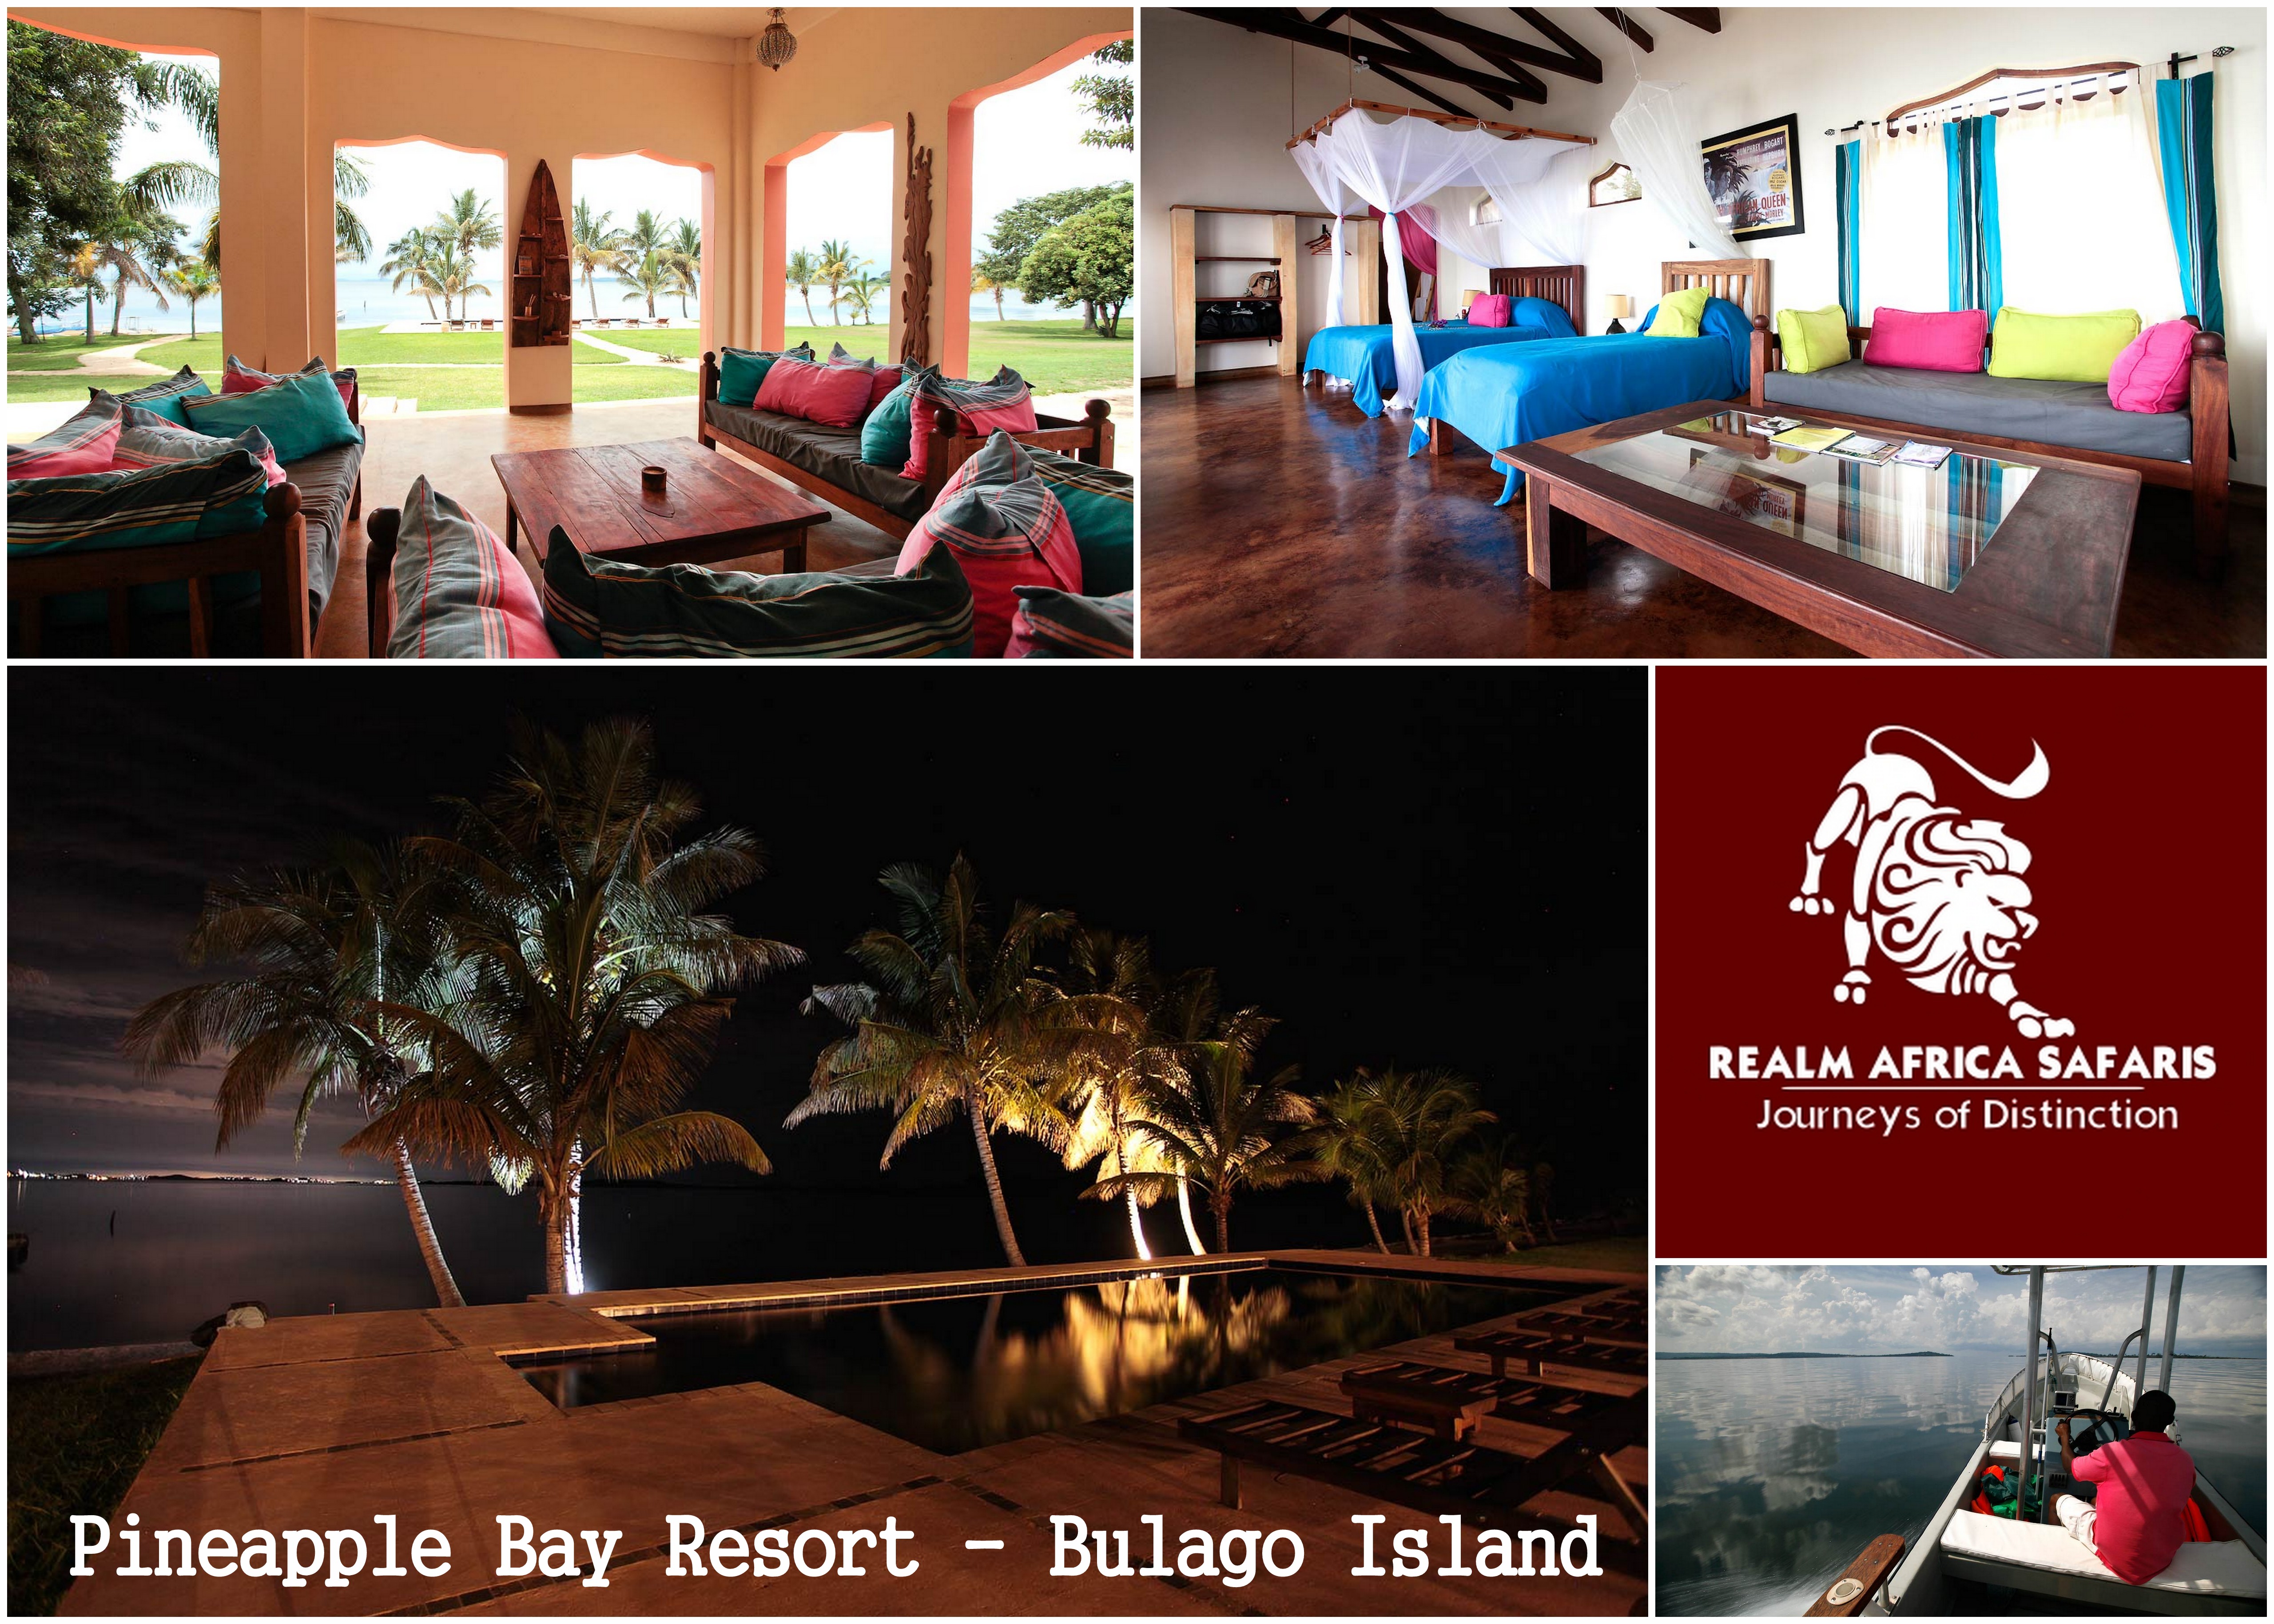 Pineapple Bay Resort on Bulago Island